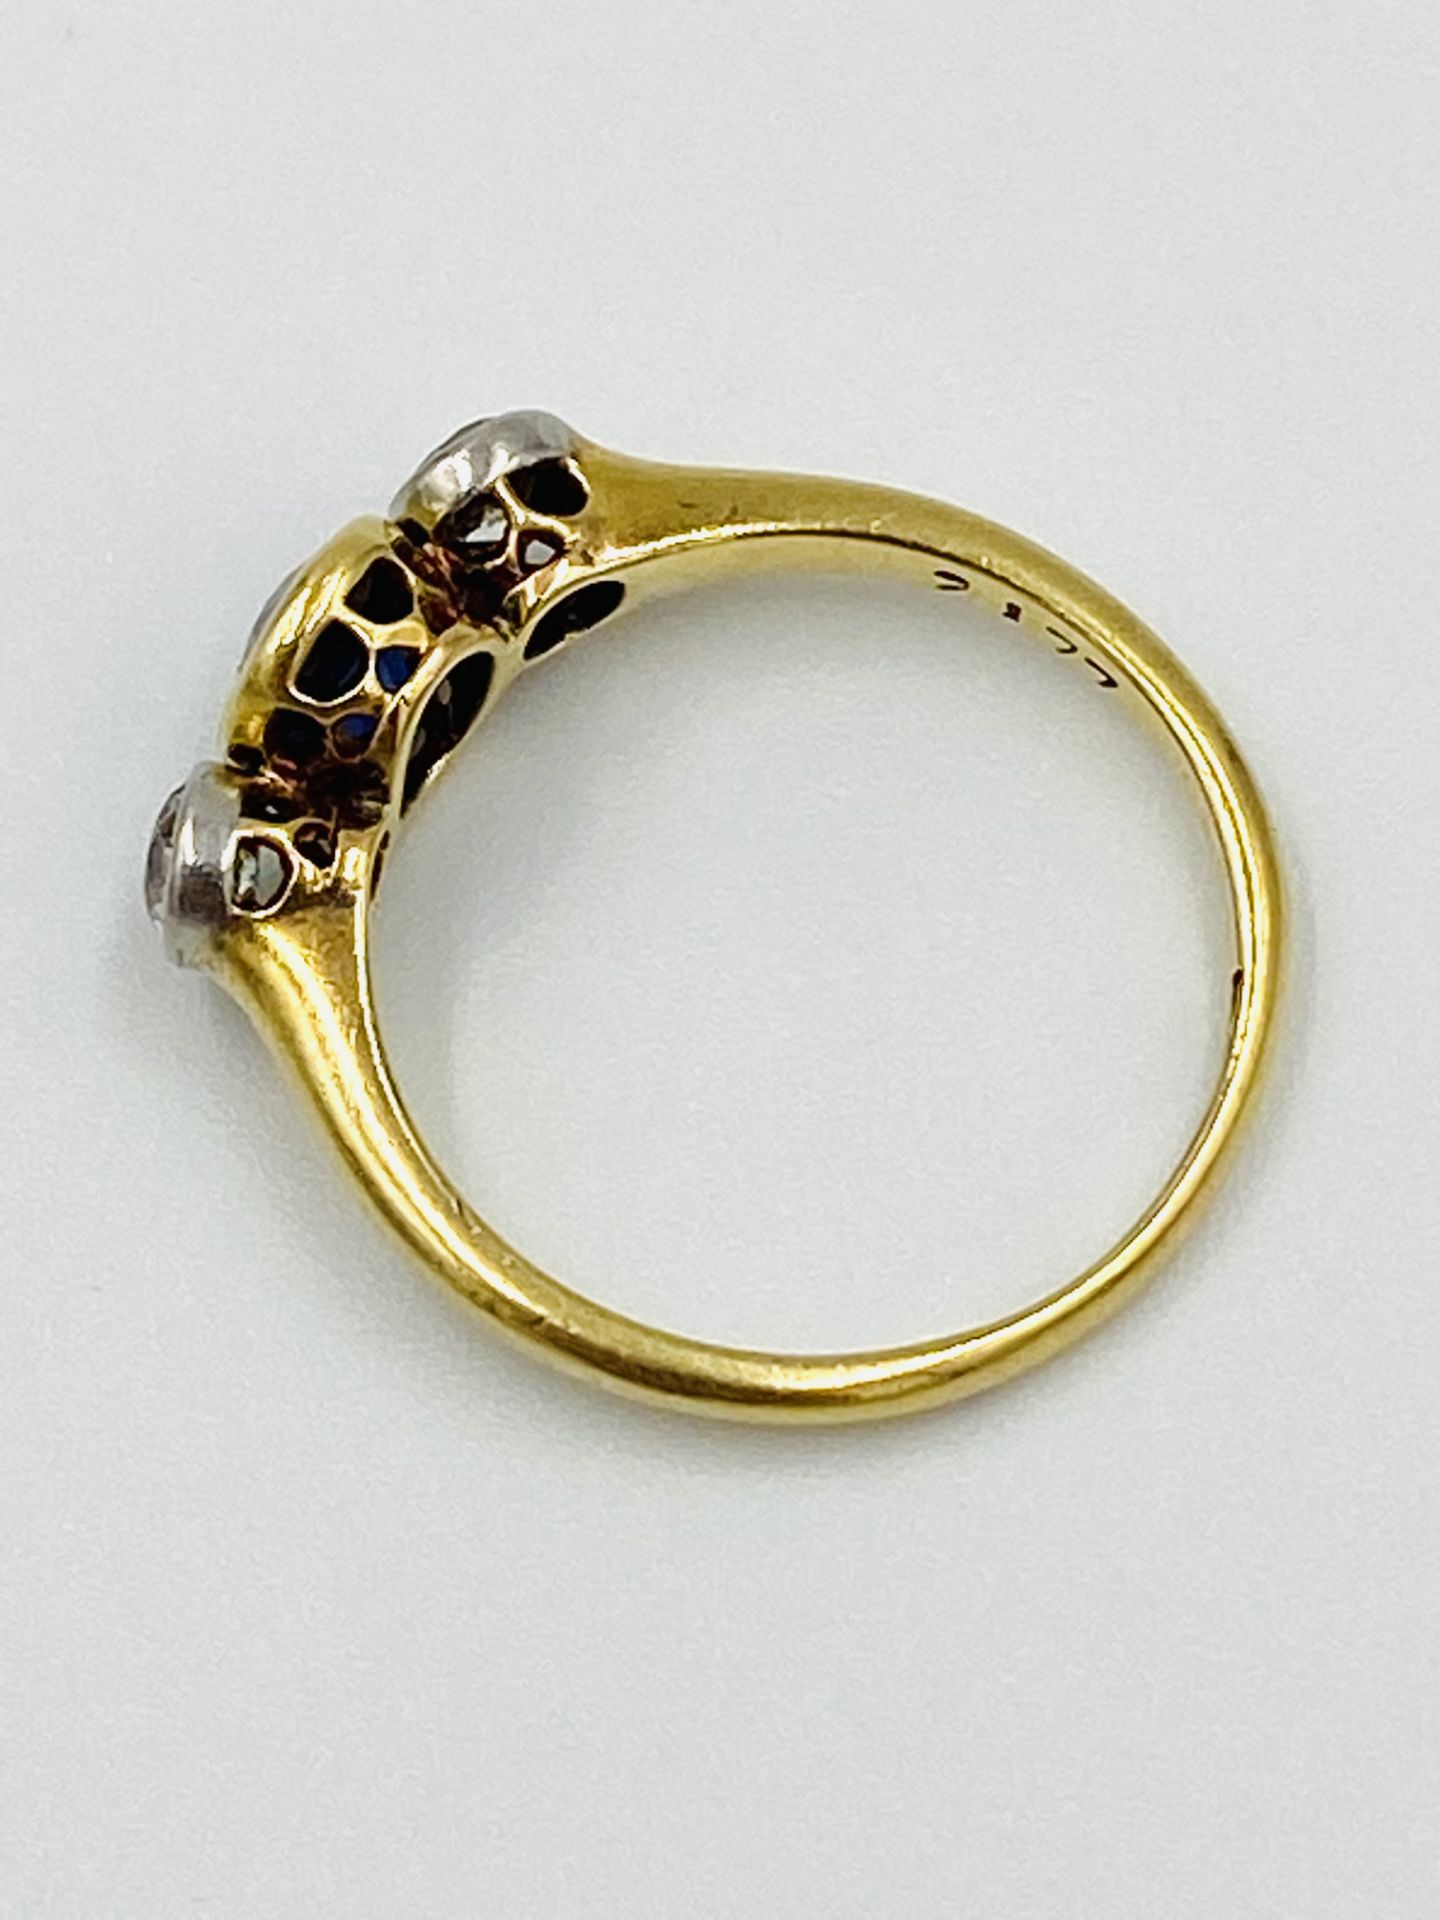 18ct gold, sapphire and diamond three stone ring - Image 3 of 5